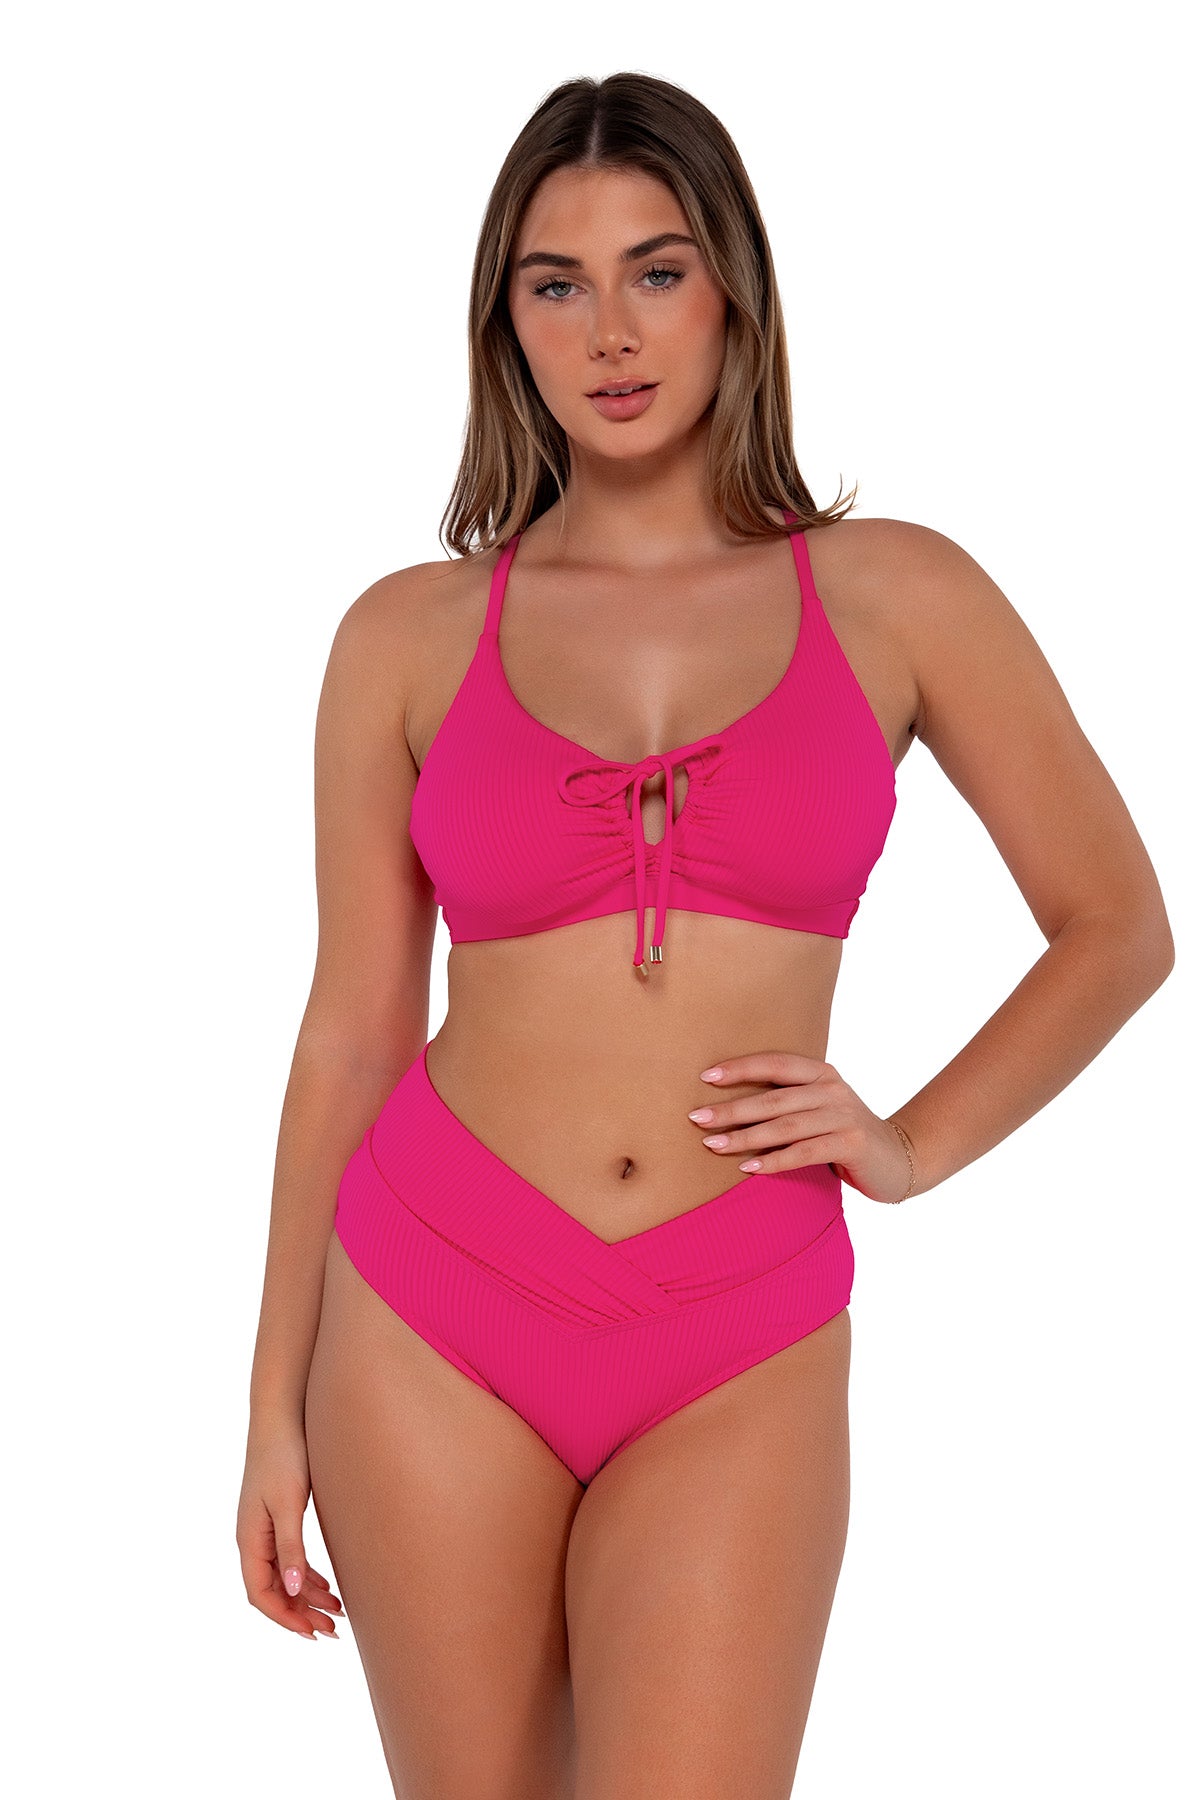 Front pose #1 of Taylor wearing Sunsets Begonia Sandbar Rib Summer Lovin' V-Front Bottom paired with Kauai Keyhole bikini top